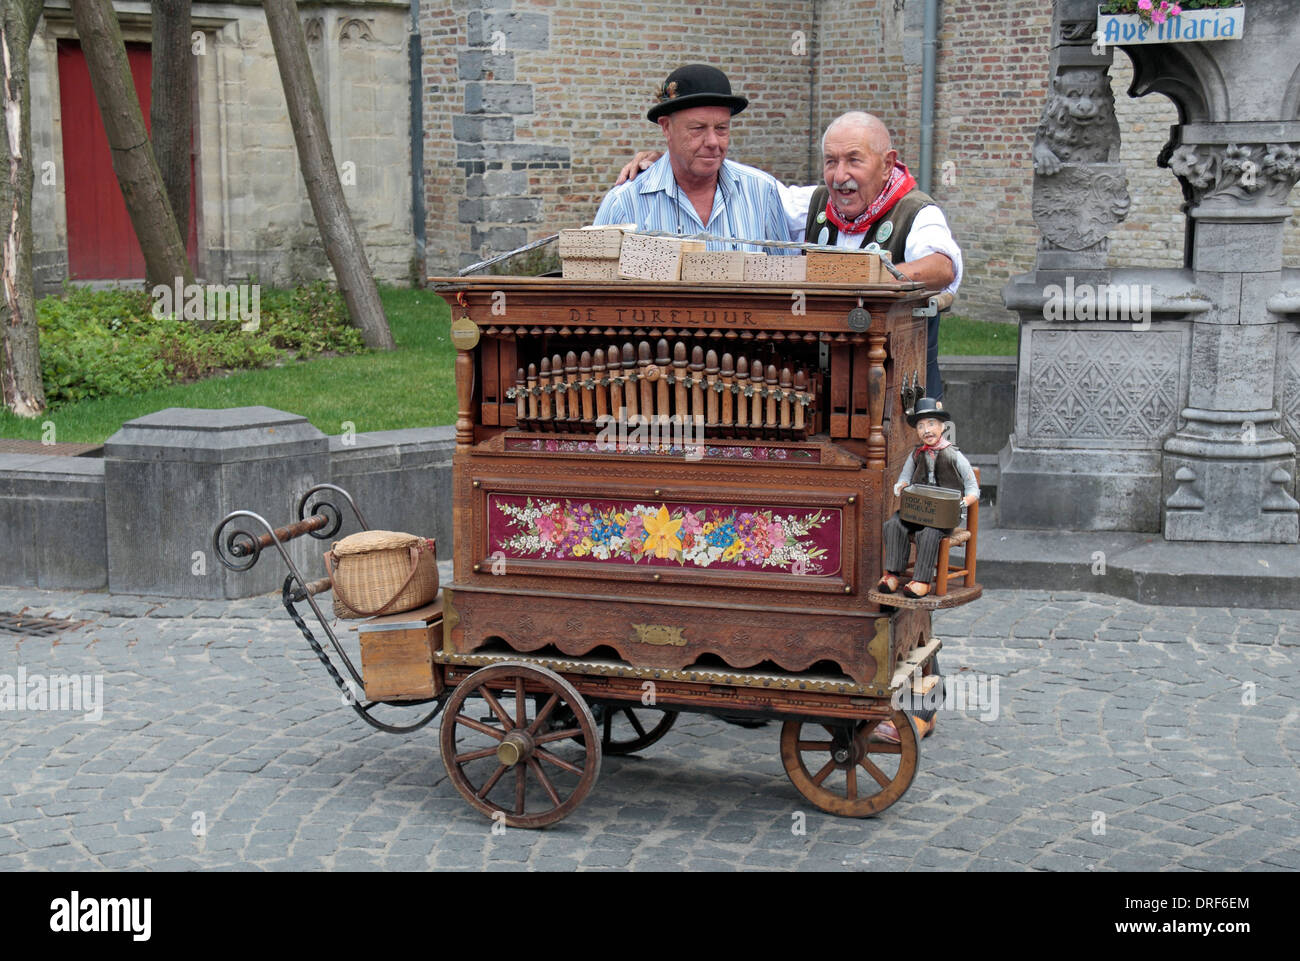 Barrel organ (or a roller organ)  in historic Bruges (Brugge), West Flanders, Belgium. Stock Photo